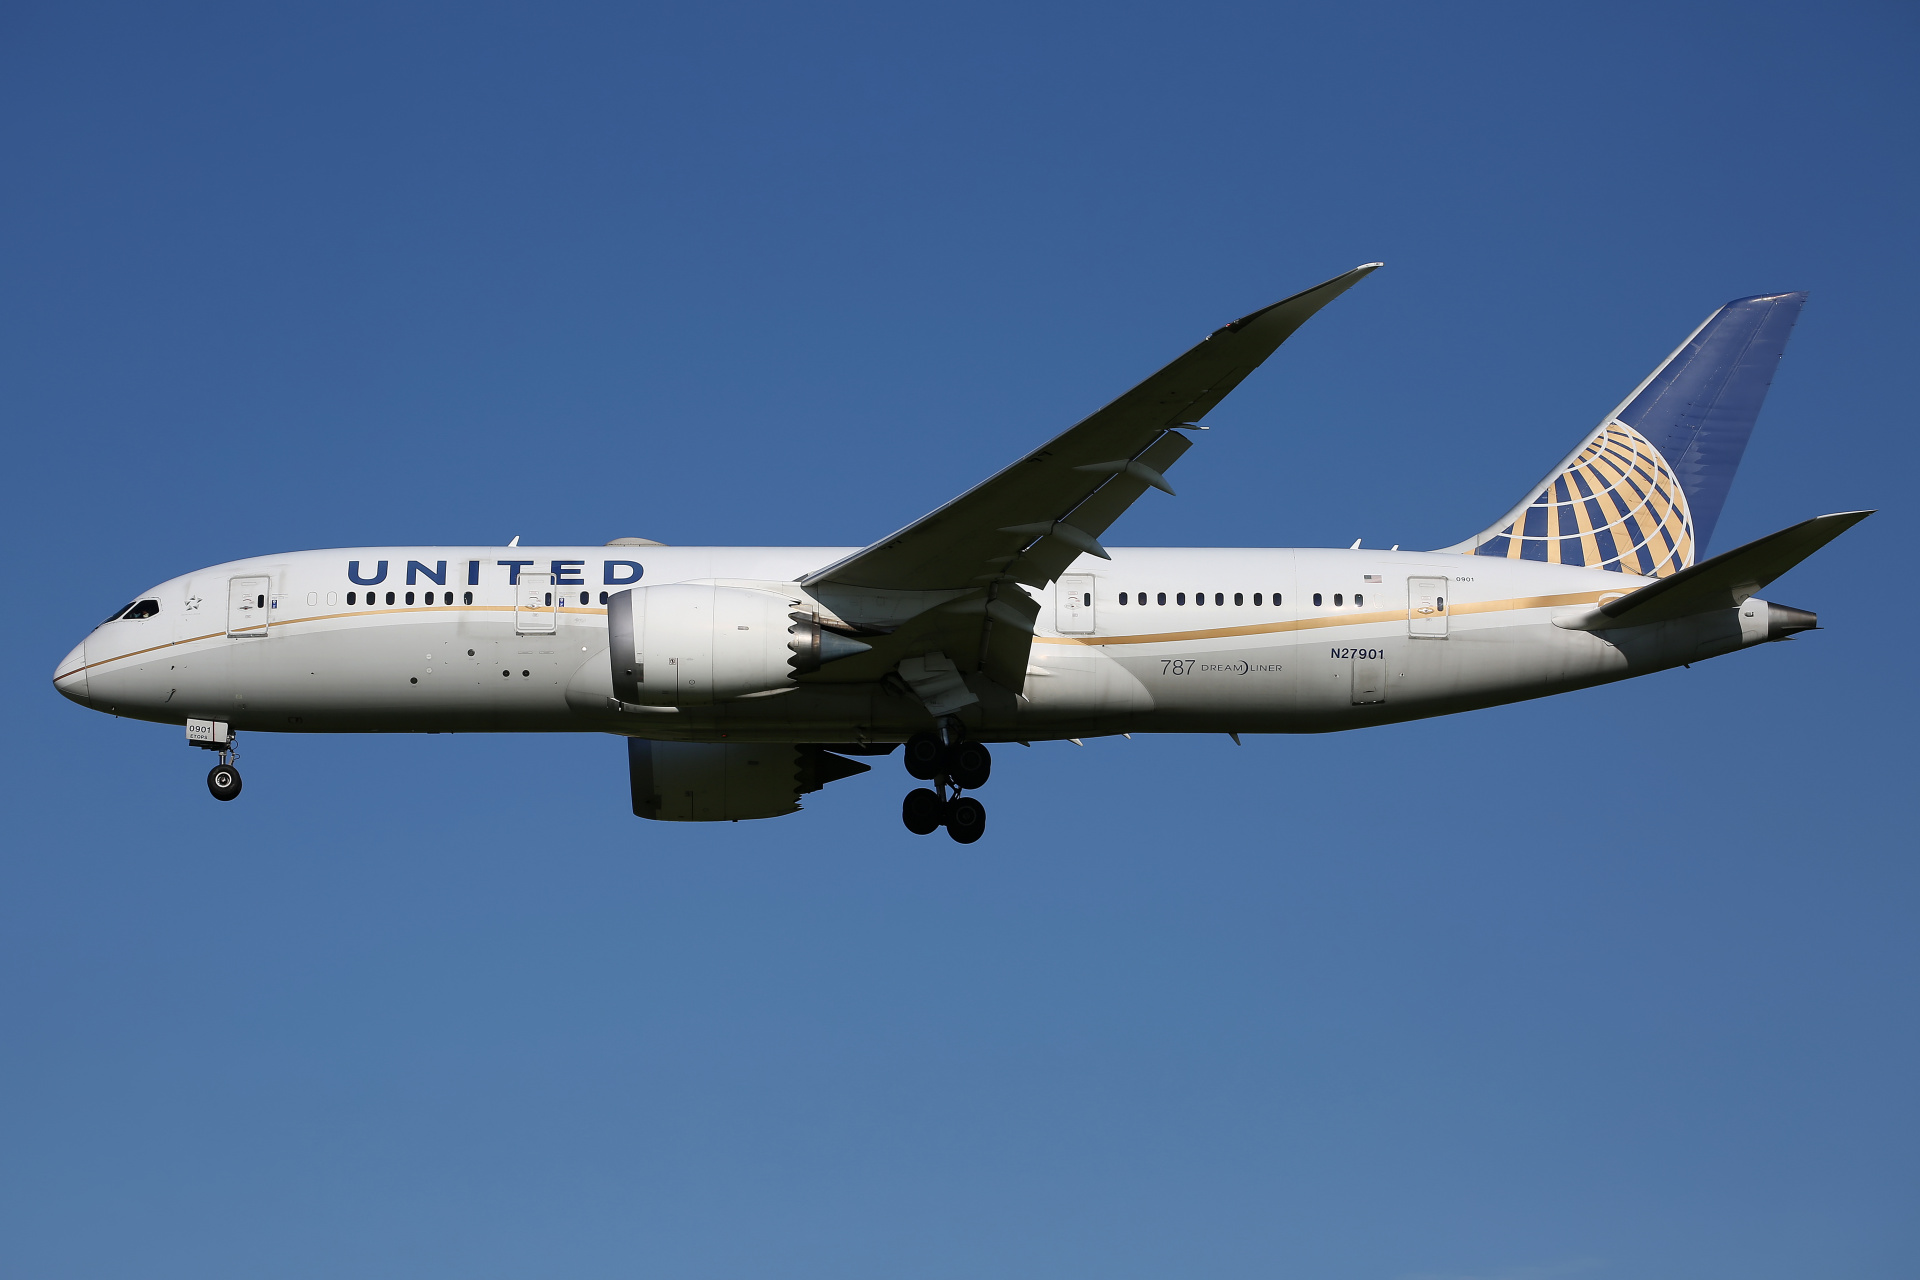 N27901, United Airlines (Aircraft » Schiphol Spotting » Boeing 787-8 Dreamliner)